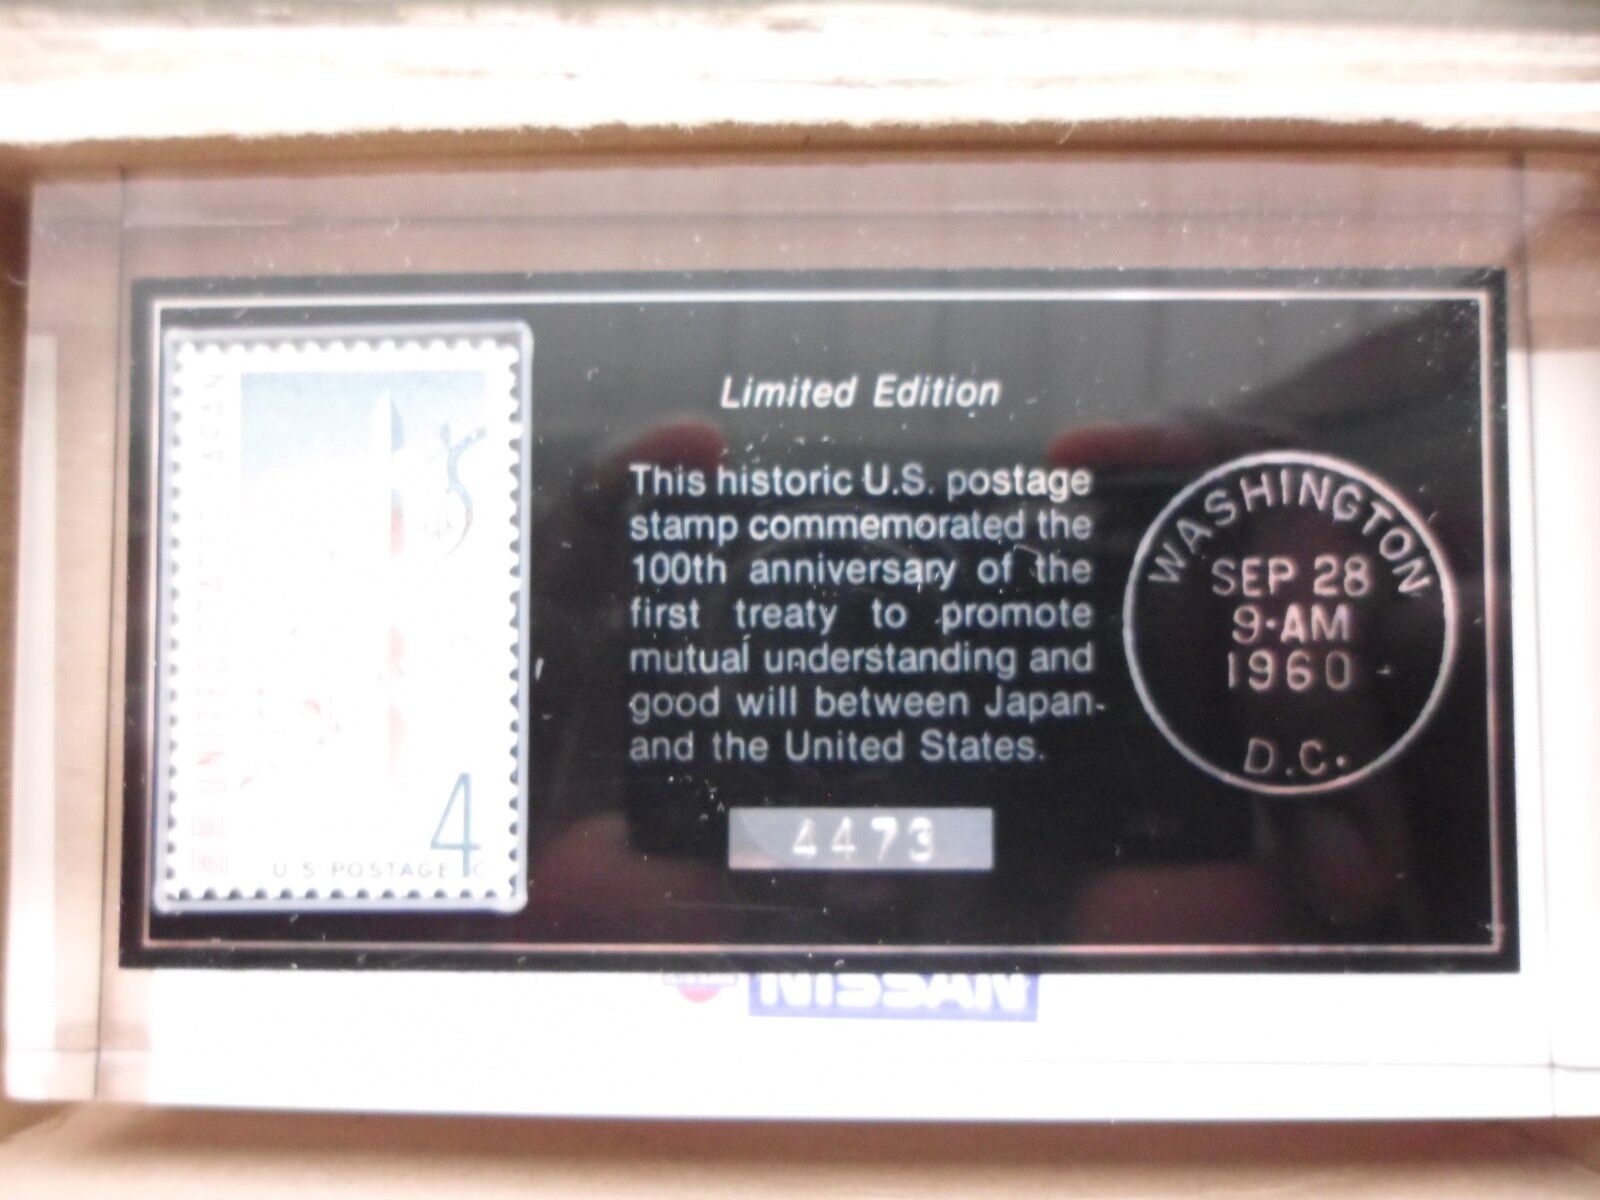 vintage limited edition USJapan treaty commemorative stamp (No. 4473)